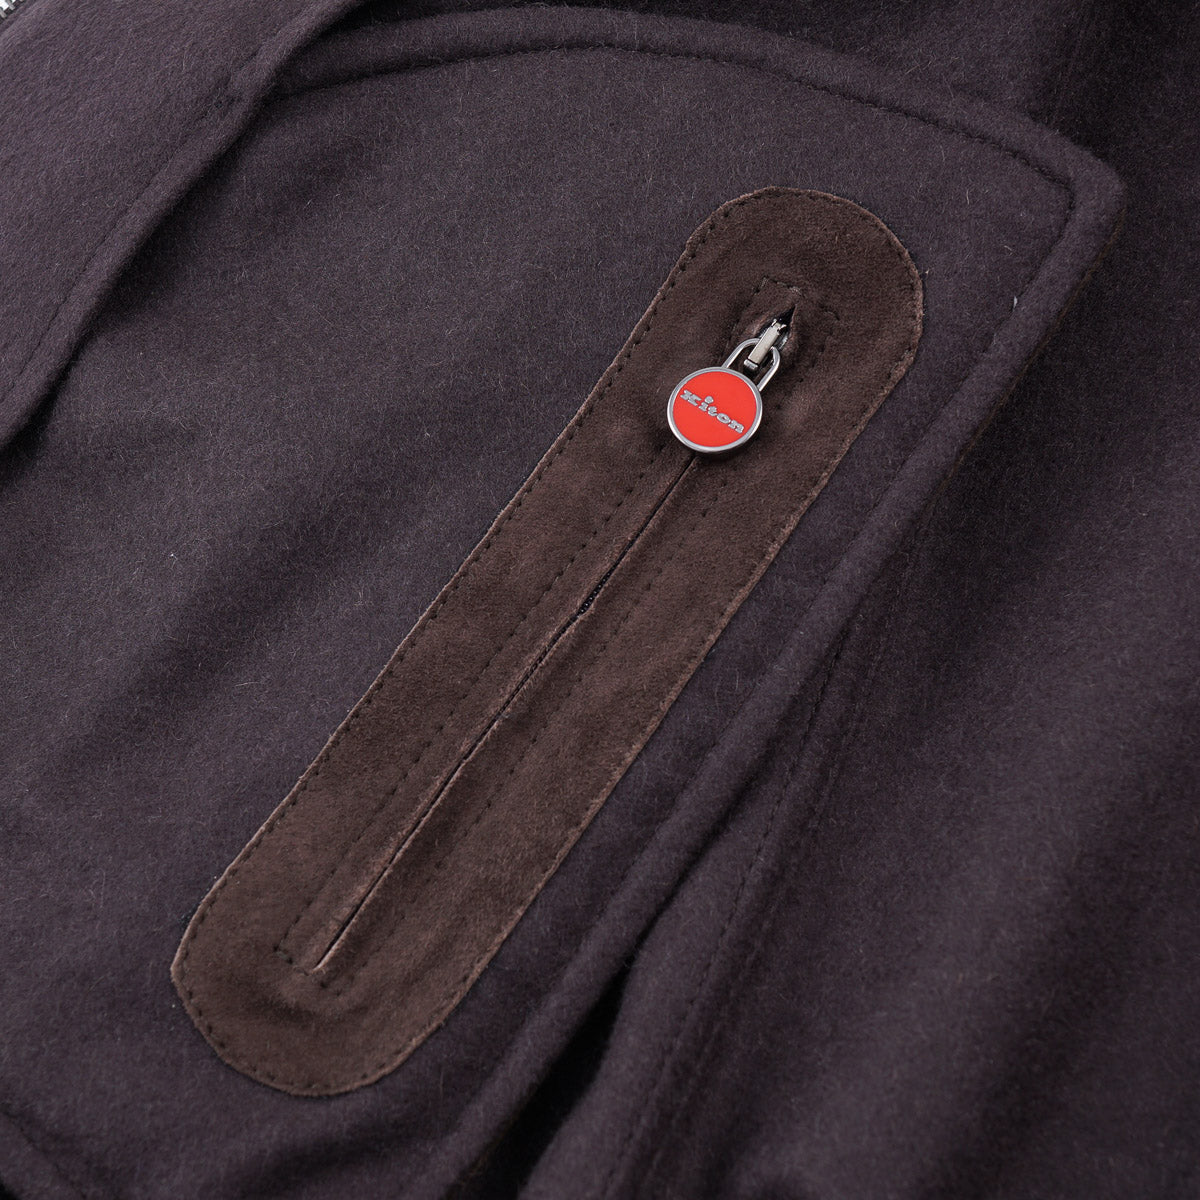 Kiton Brushed Cashmere Bomber Jacket - Top Shelf Apparel